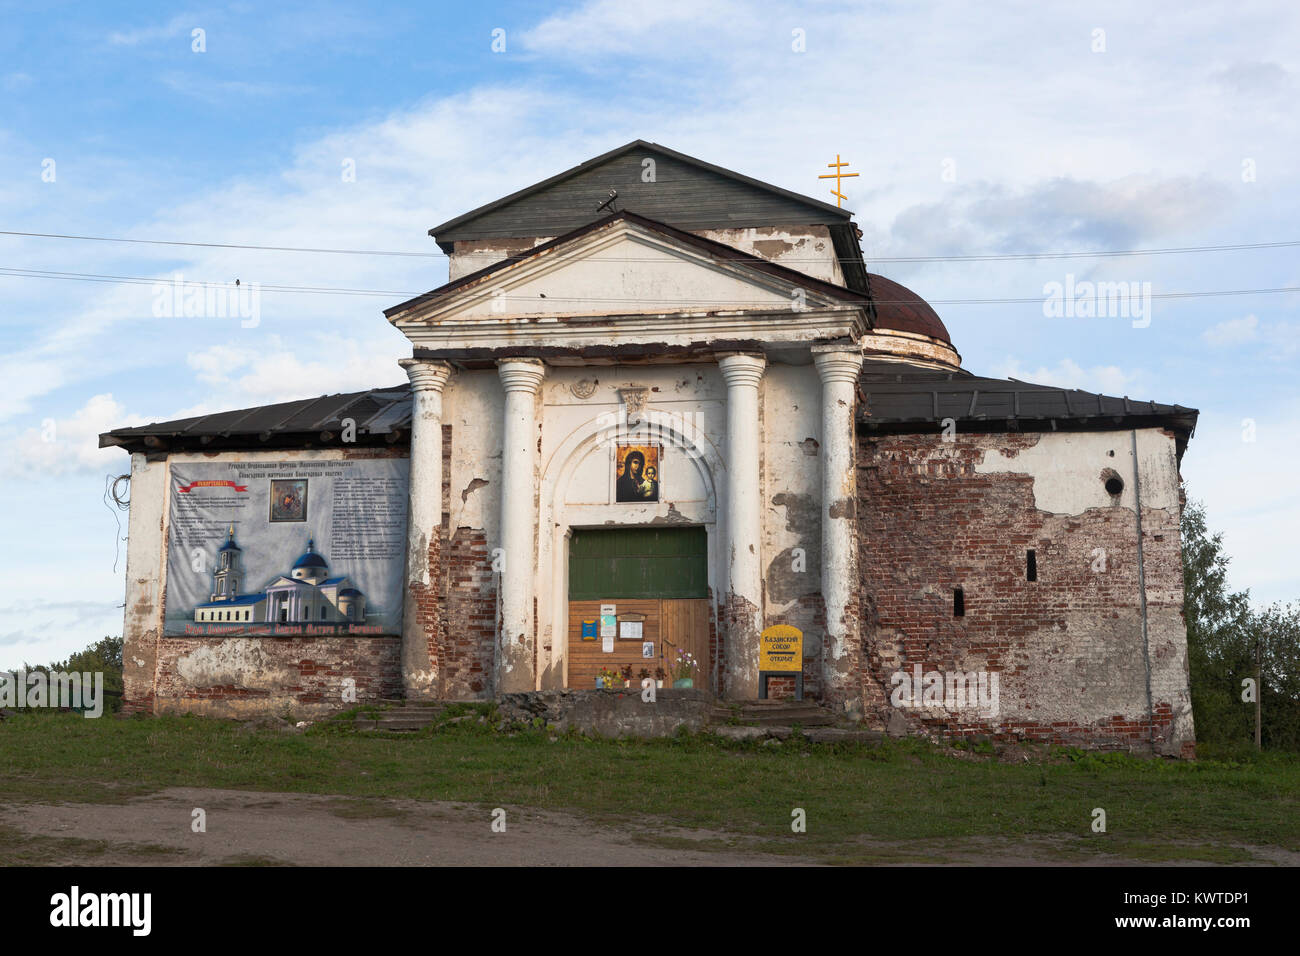 Kirillov, Vologda region, Russia - August 9, 2015: Church of the Kazan Icon of the Theotokos in the town Kirillov, Vologda region Stock Photo